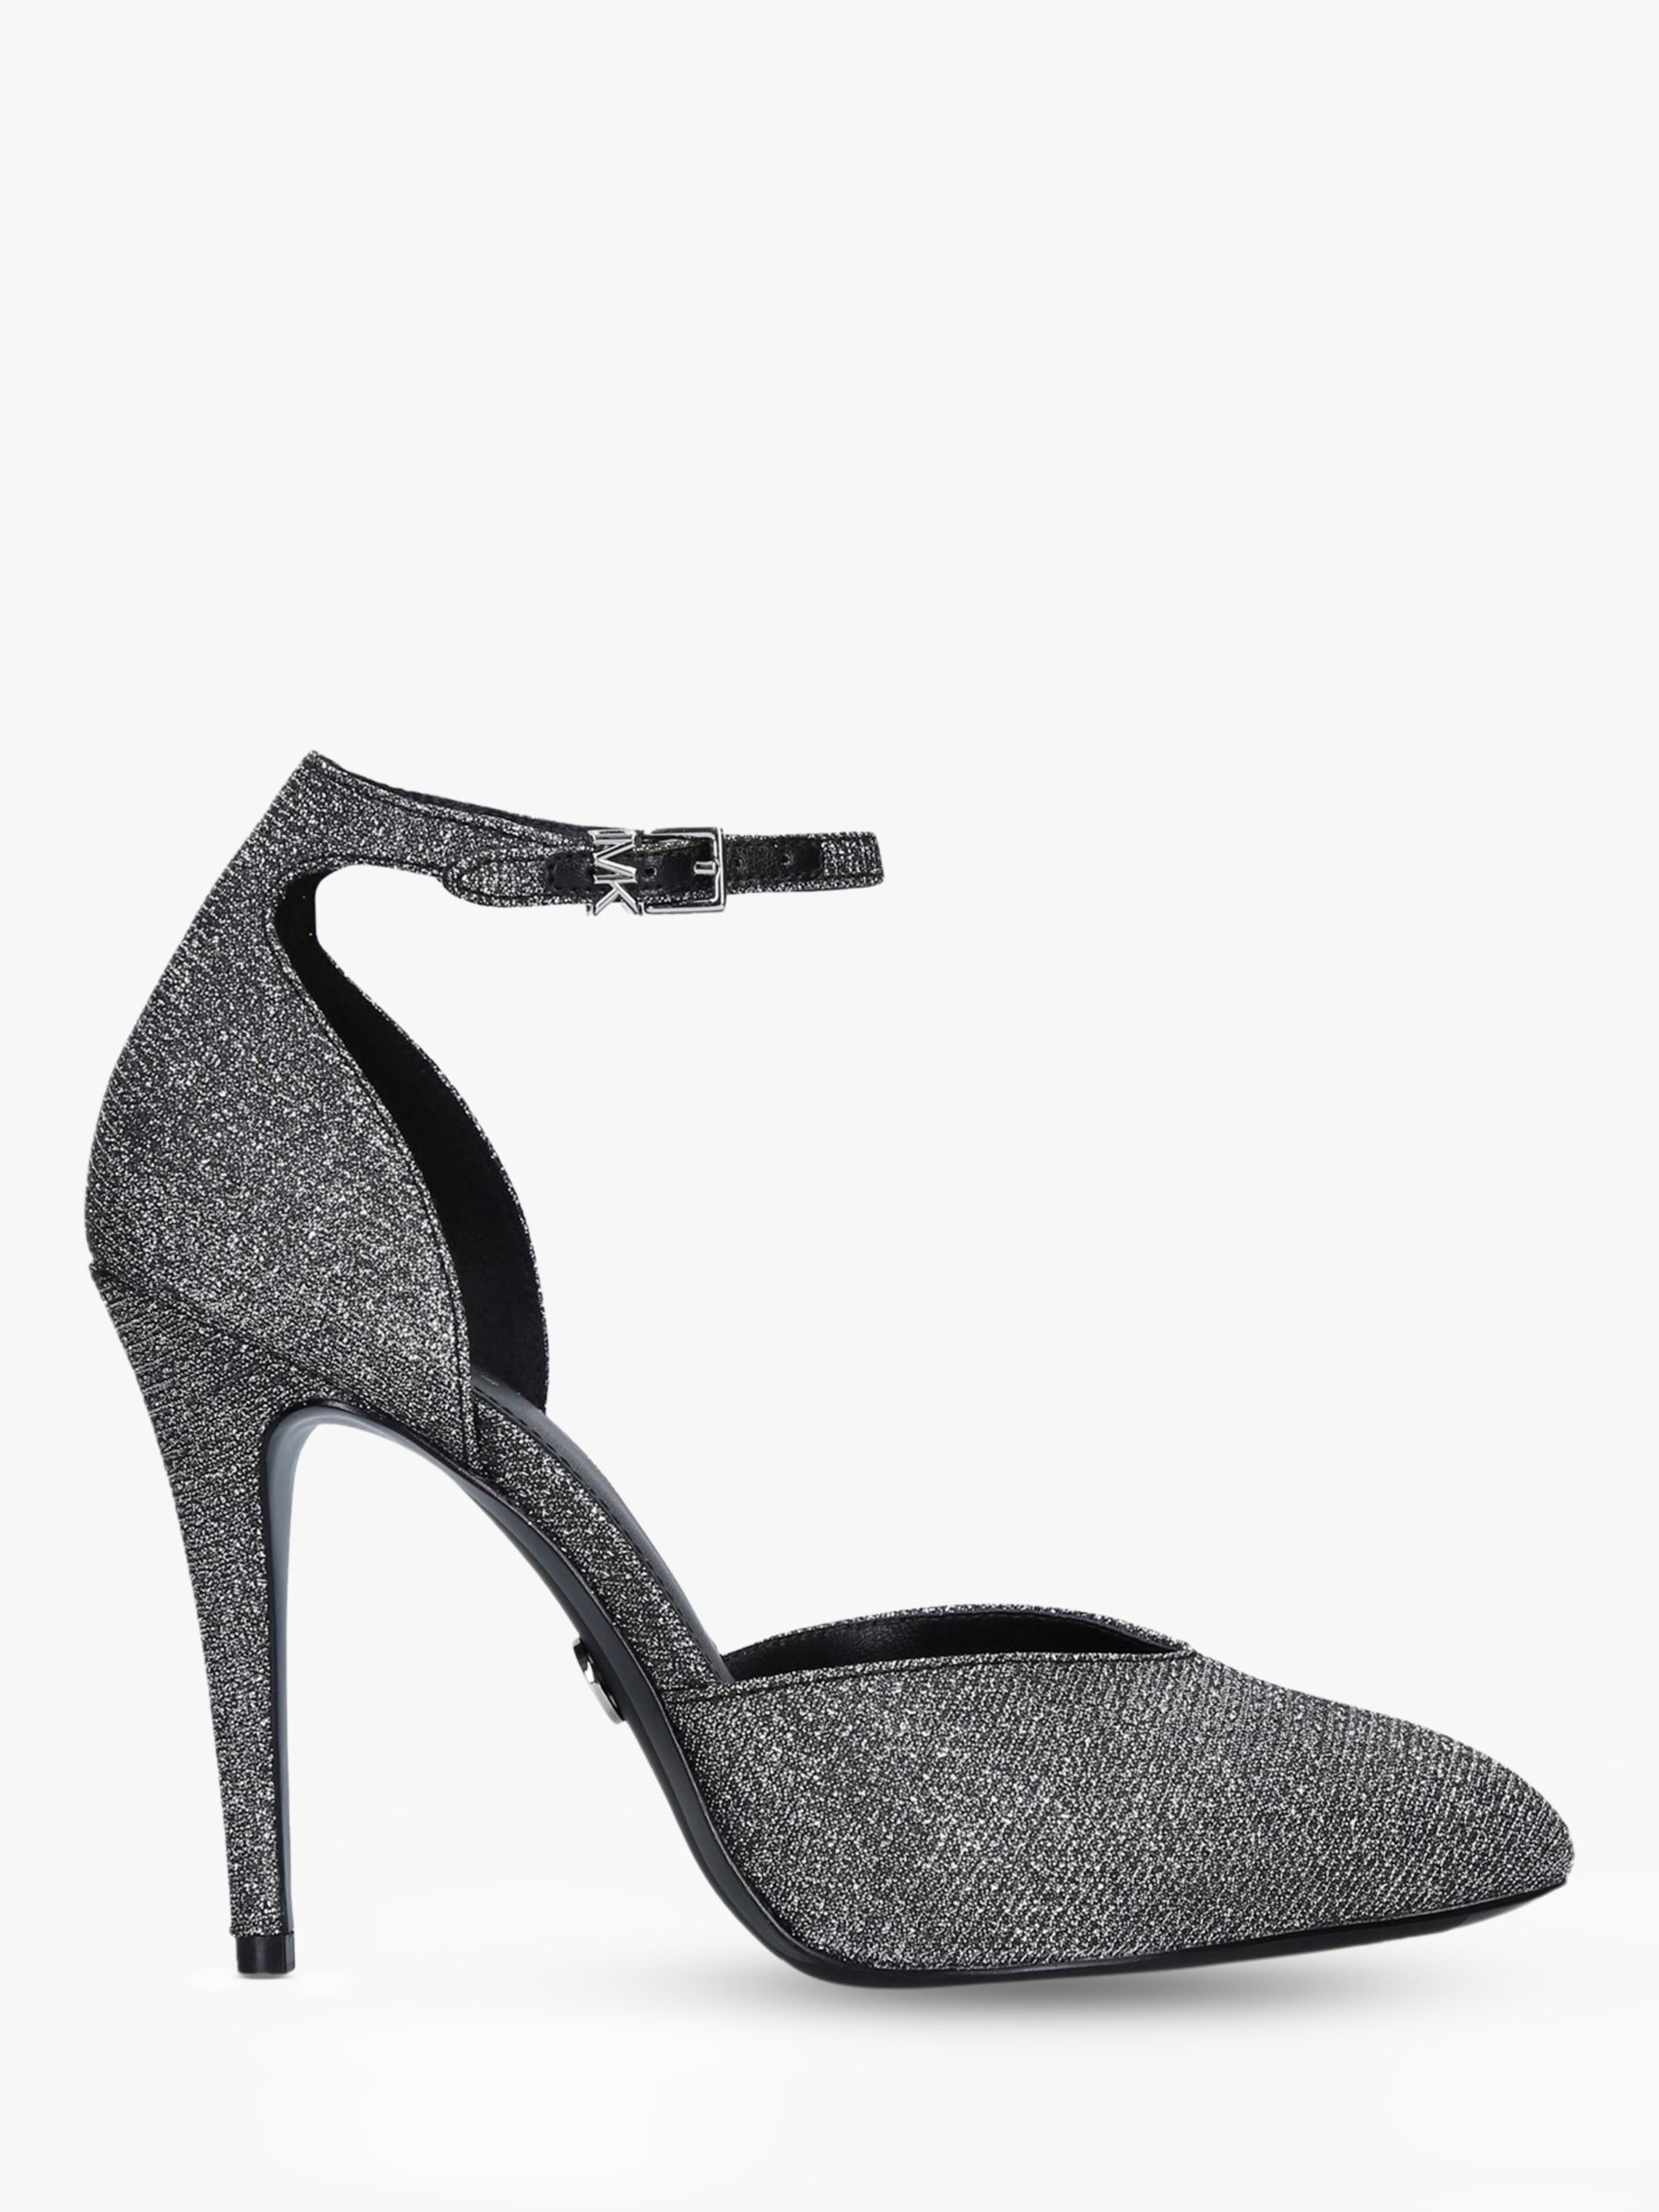 MICHAEL Michael Kors Elysia Ankle Strap Court Shoes, Black Glitter